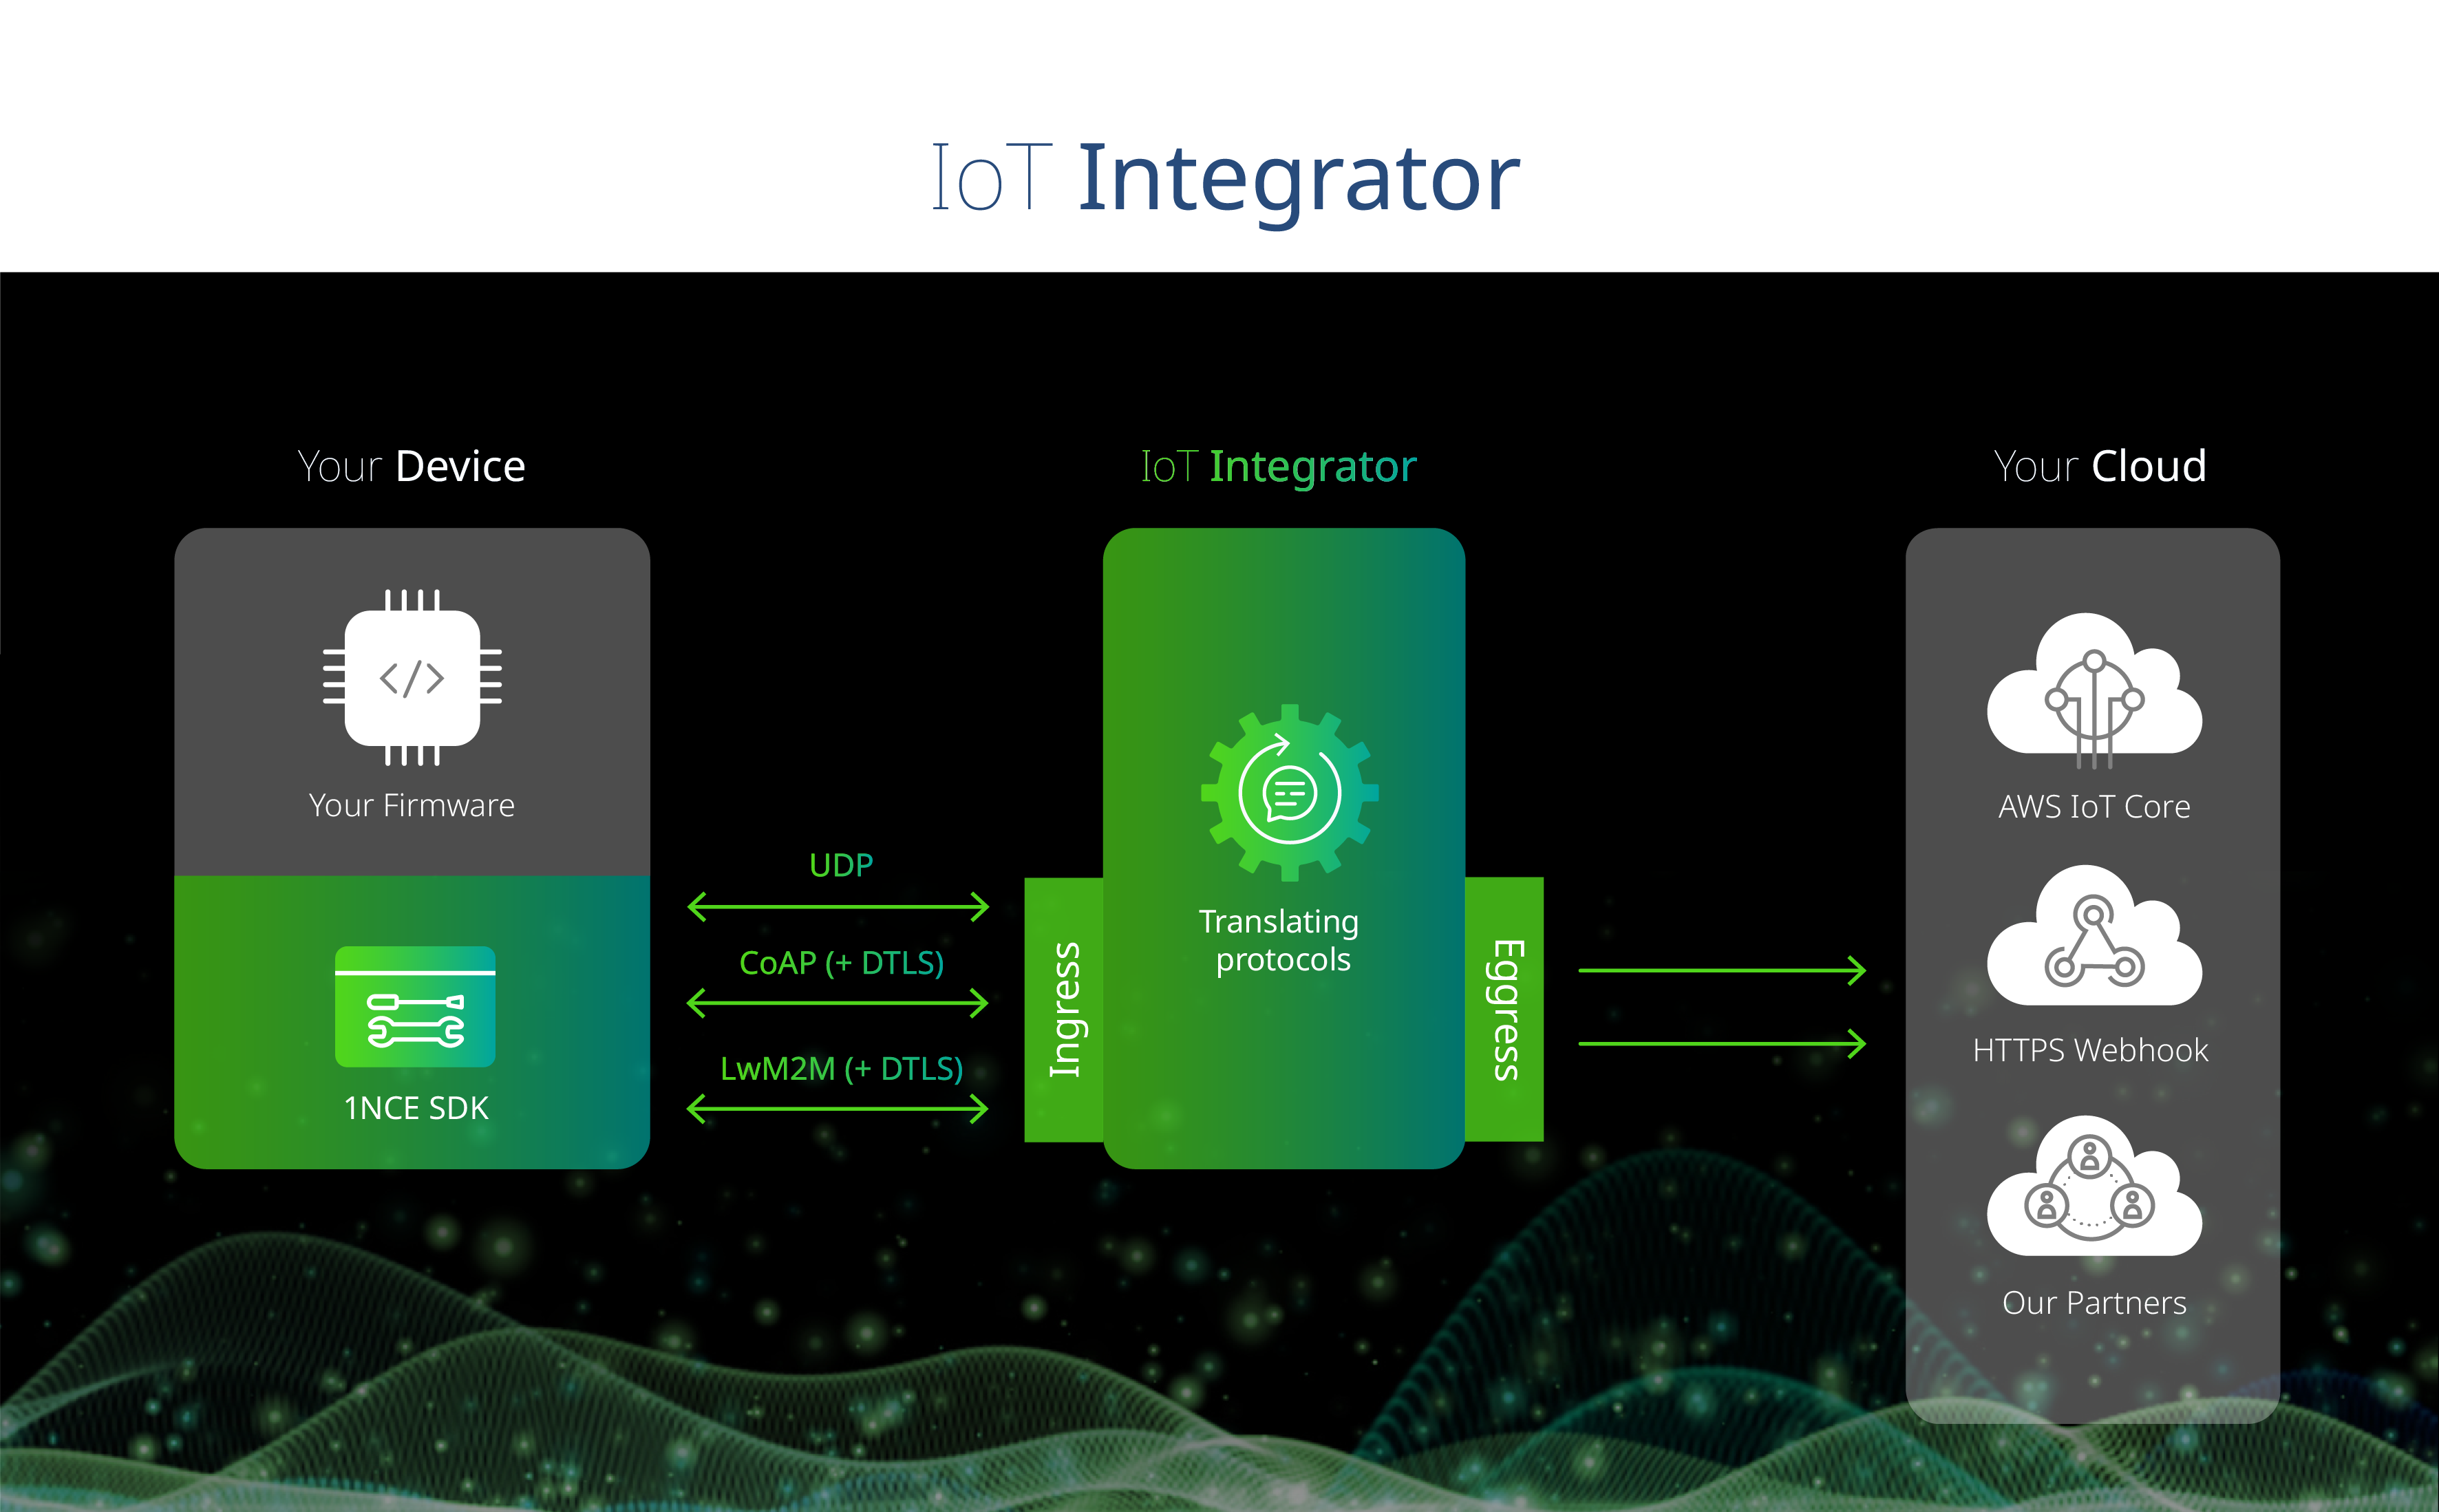 Cloud Integrator as part of the IoT Integrator